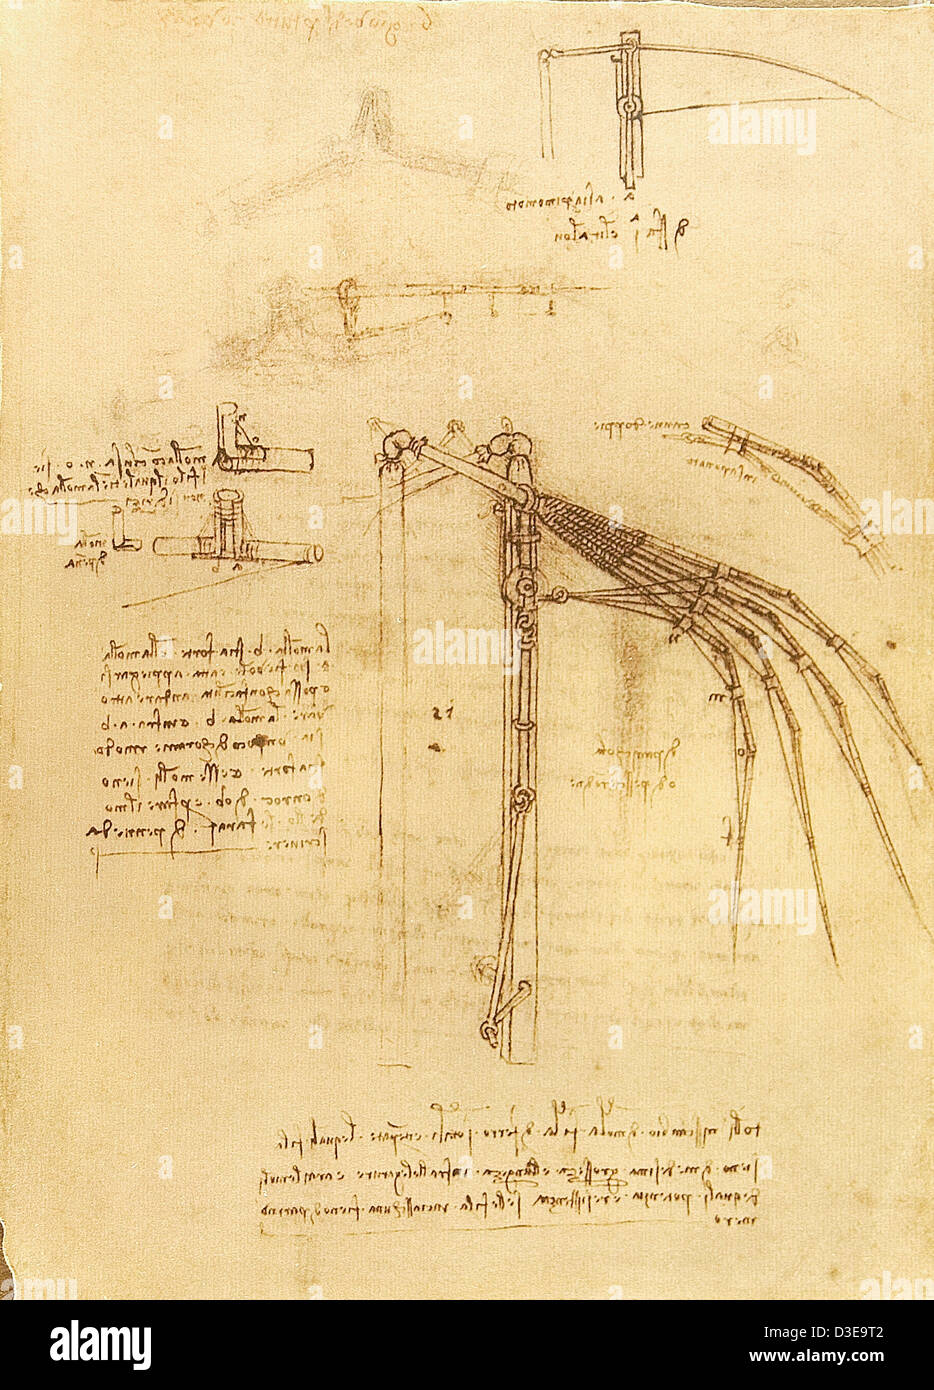 Leonardo da Vinci, Codex Atlanticus. Stock Photo